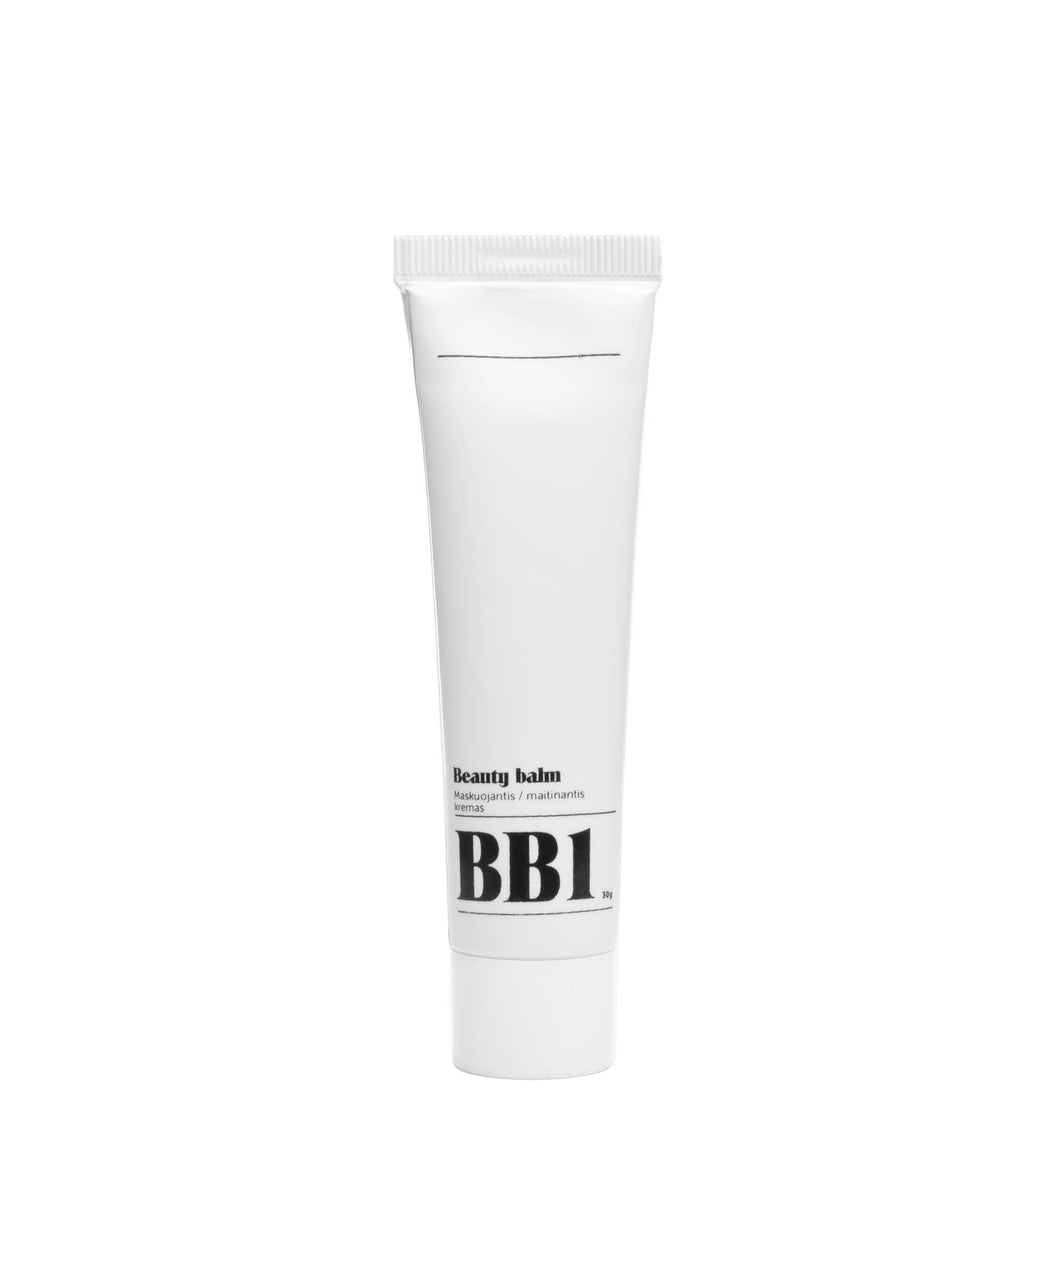 BB1 concealing/nourishing cream, 30g